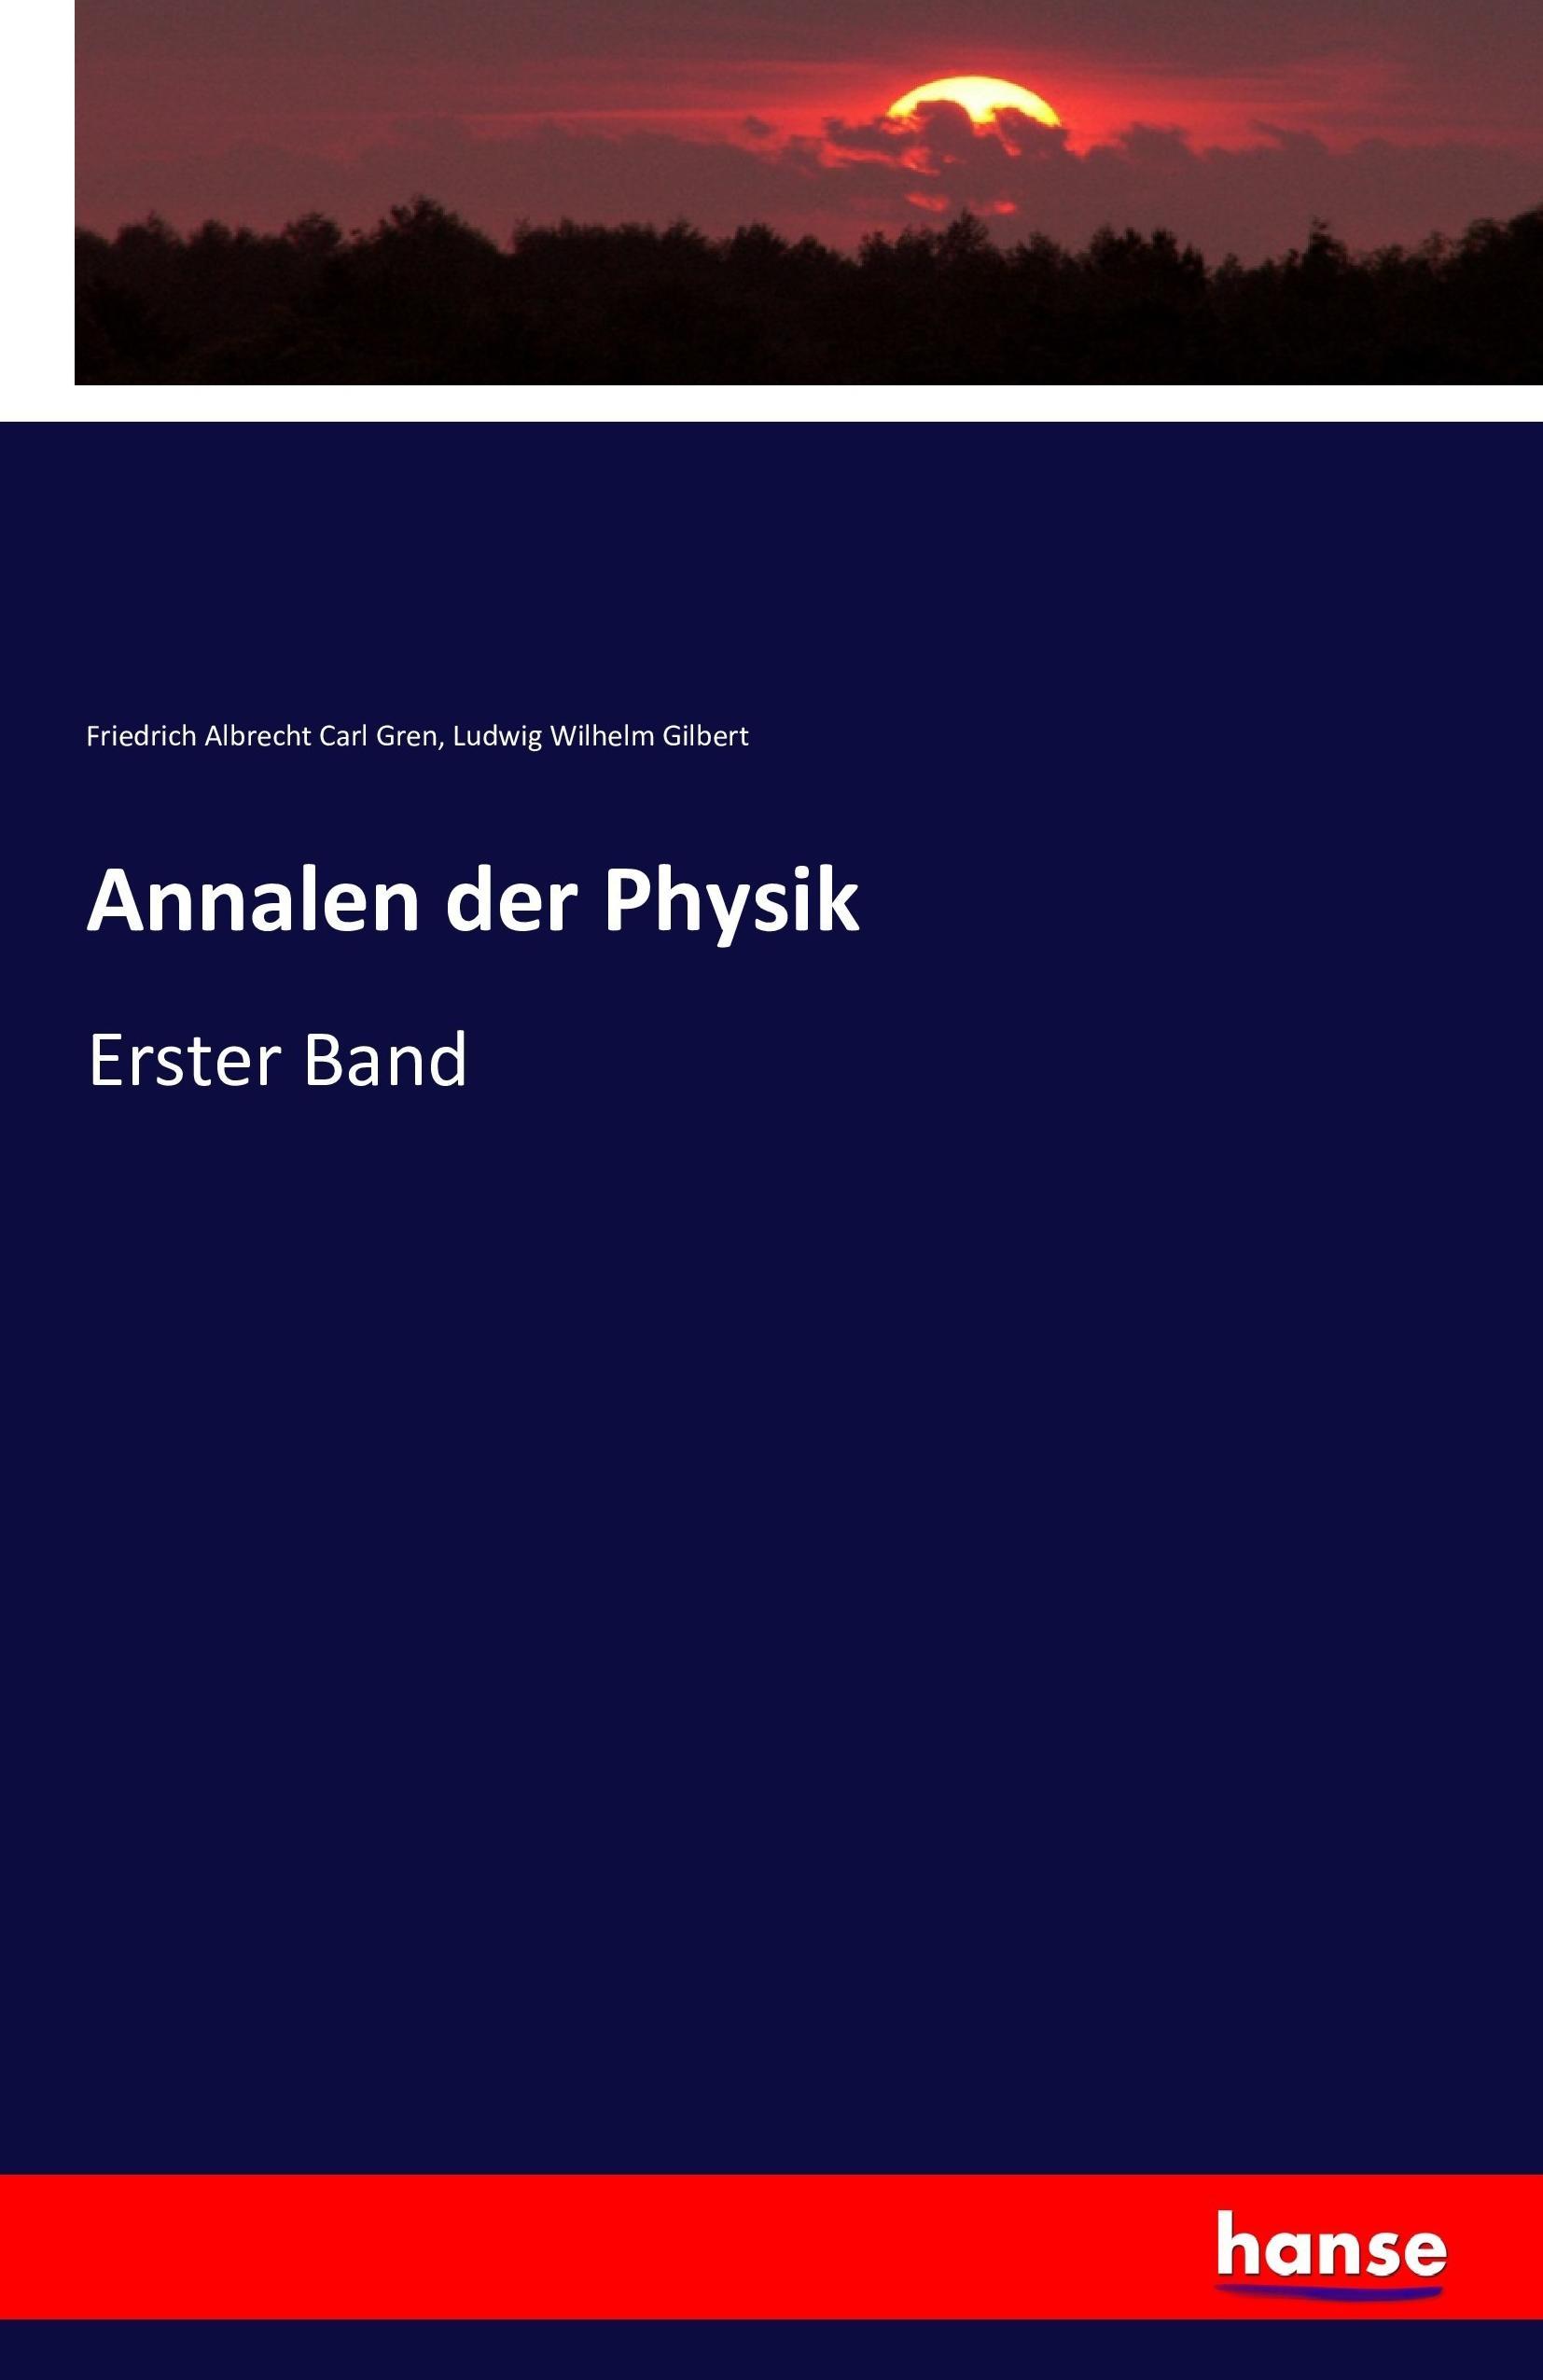 Annalen der Physik / Erster Band / Friedrich Albrecht Carl Gren (u. a.) / Taschenbuch / Paperback / 564 S. / Deutsch / 2016 / hansebooks / EAN 9783741142437 - Gren, Friedrich Albrecht Carl